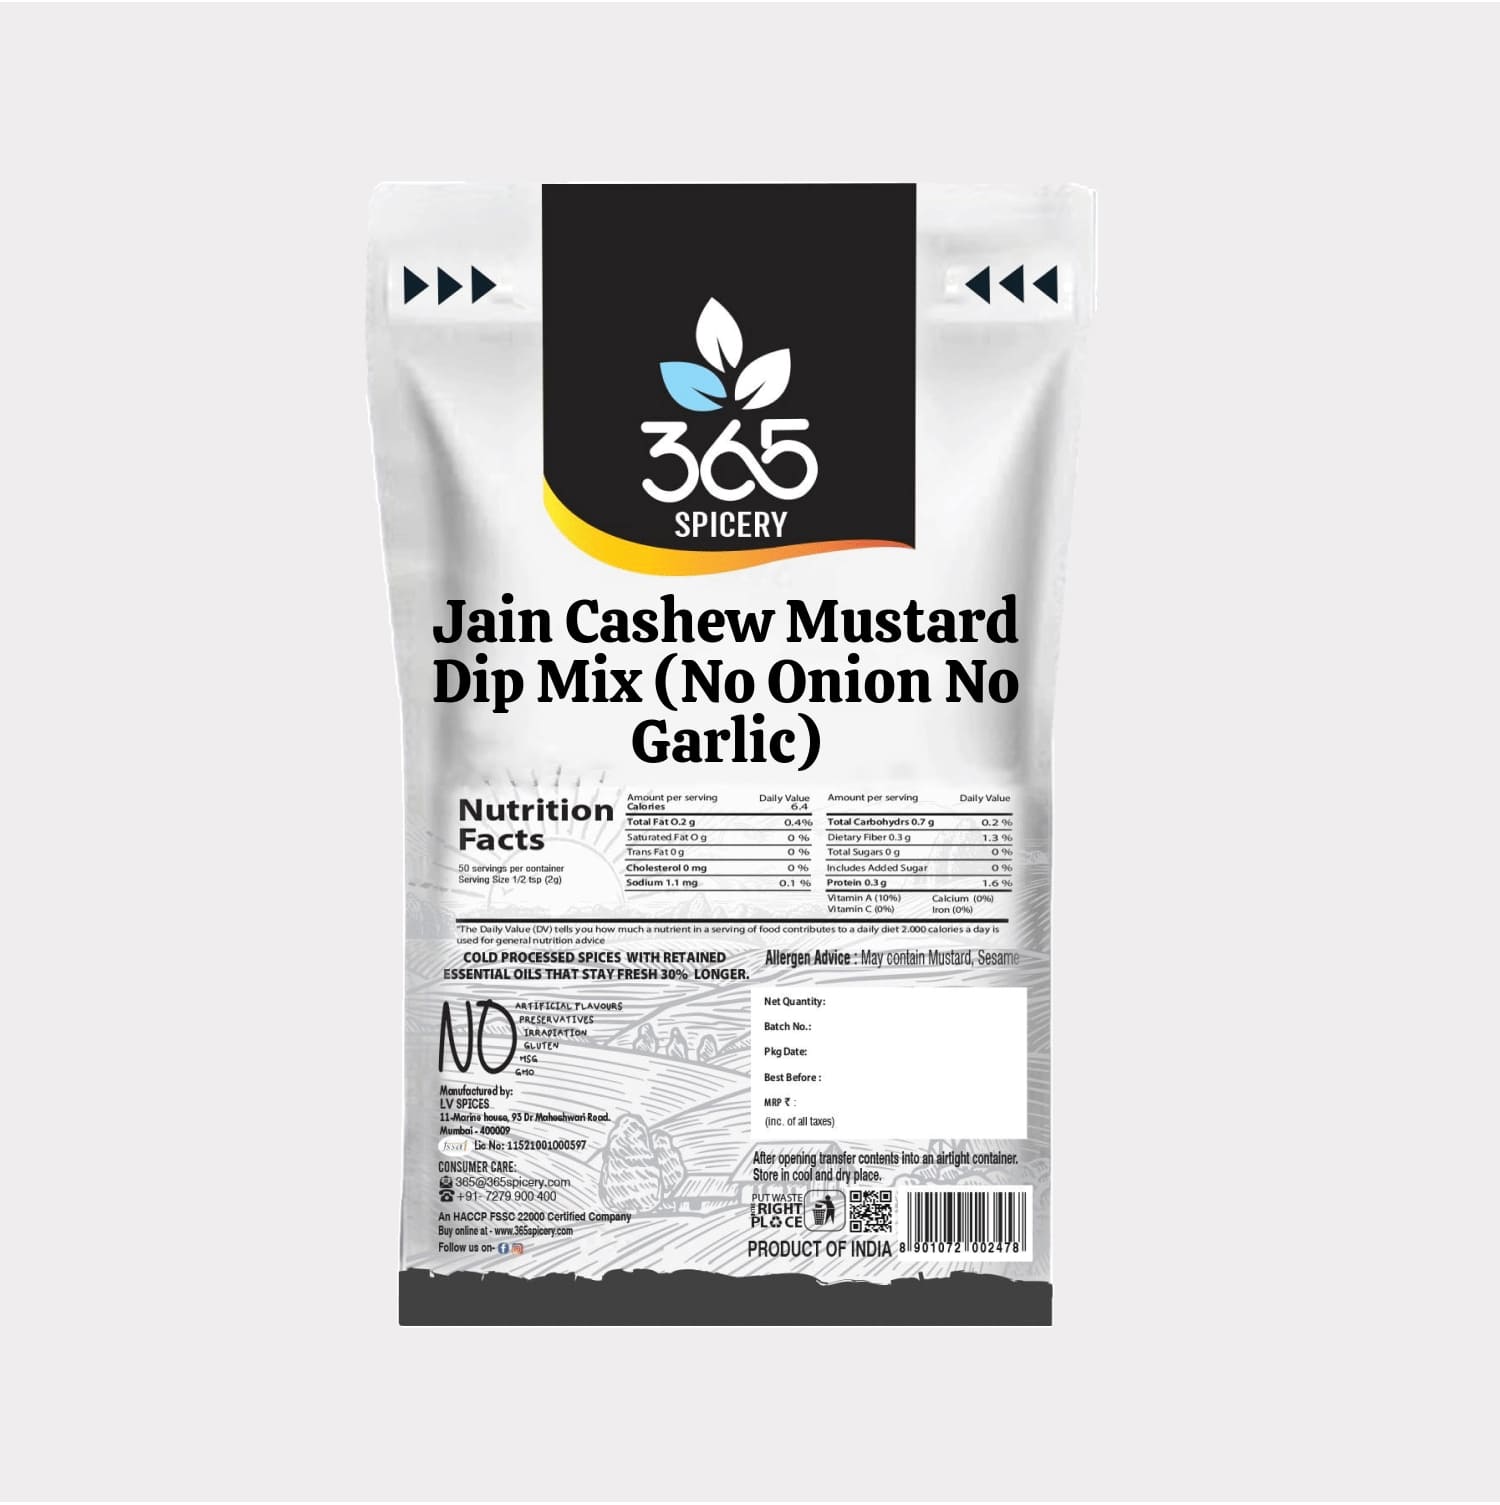 Jain Cashew Mustard Dip Mix (No Onion No Garlic)